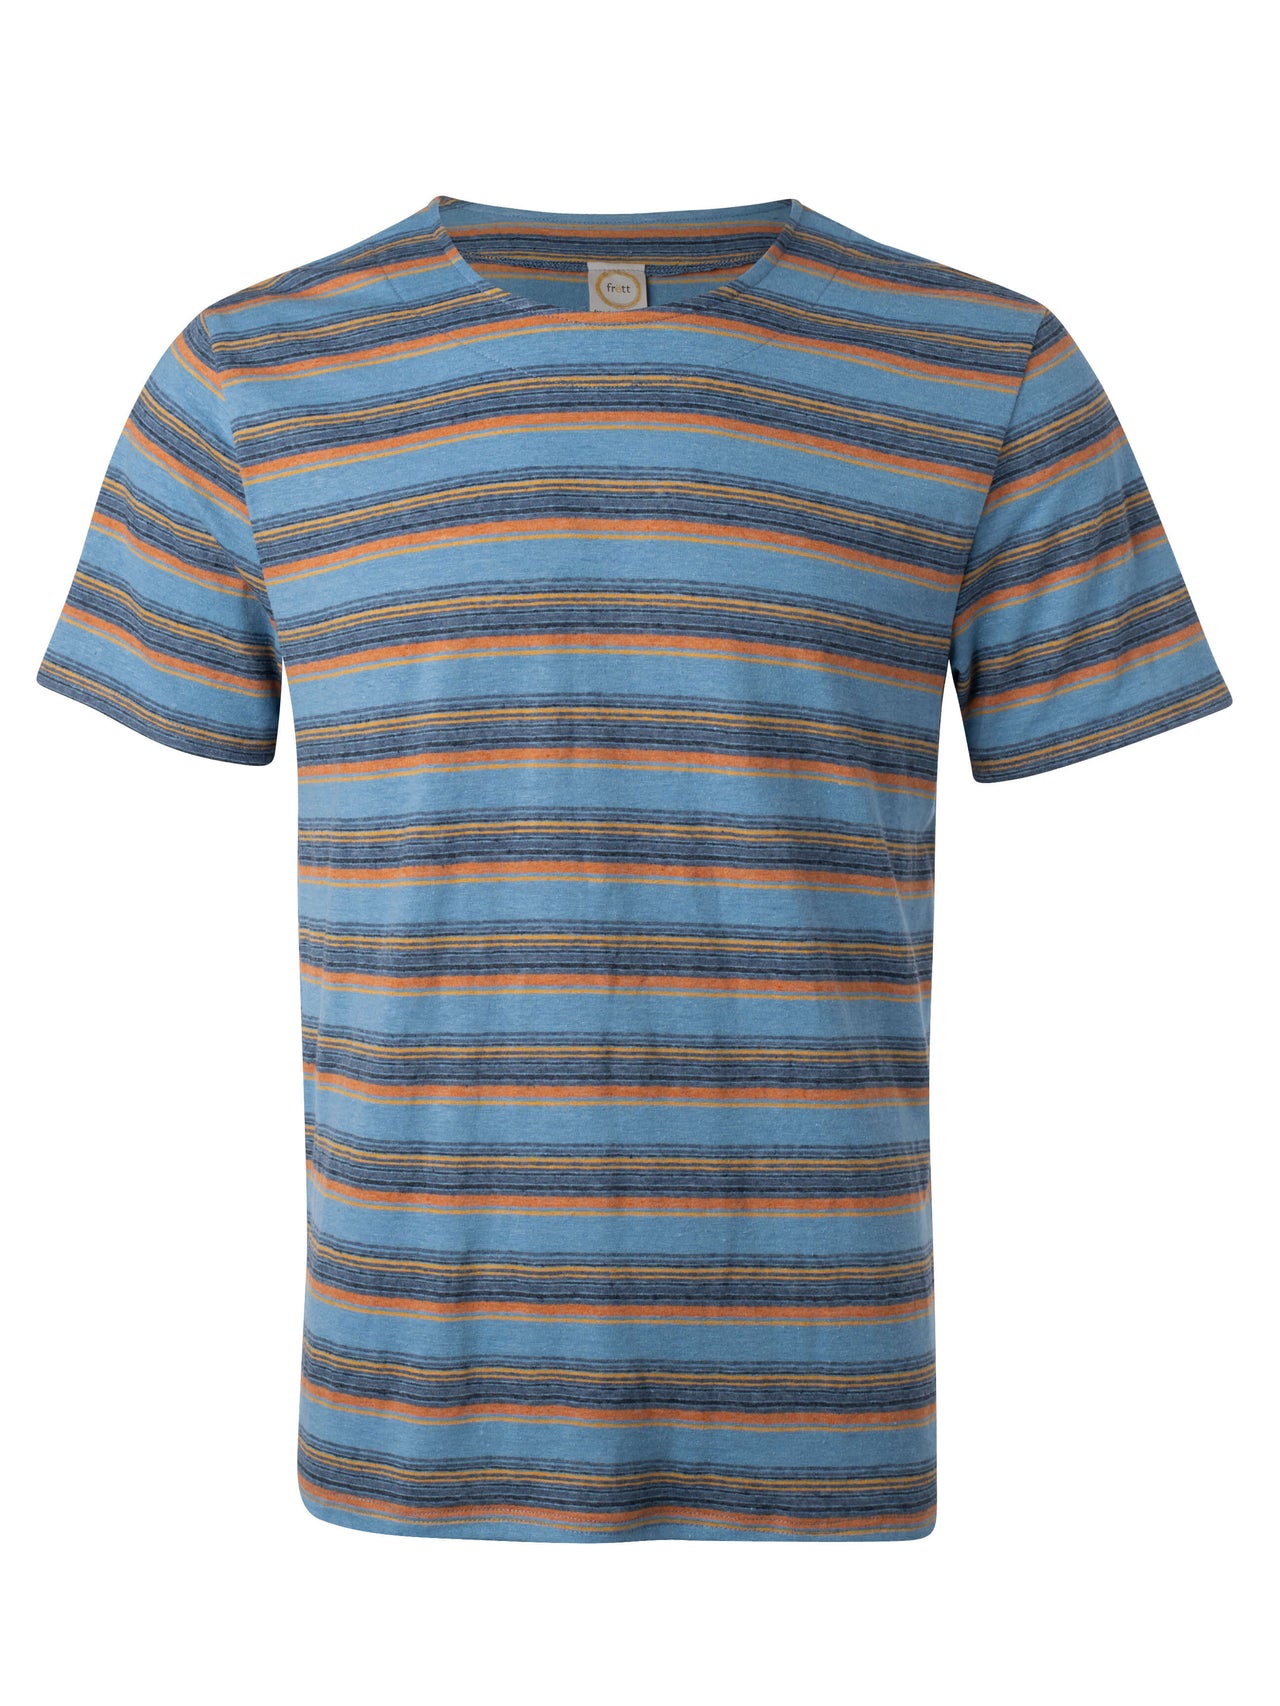 T-shirt-SURF bleu raye-chanvre coton bio-bleu-unisexe-ghost-F2251